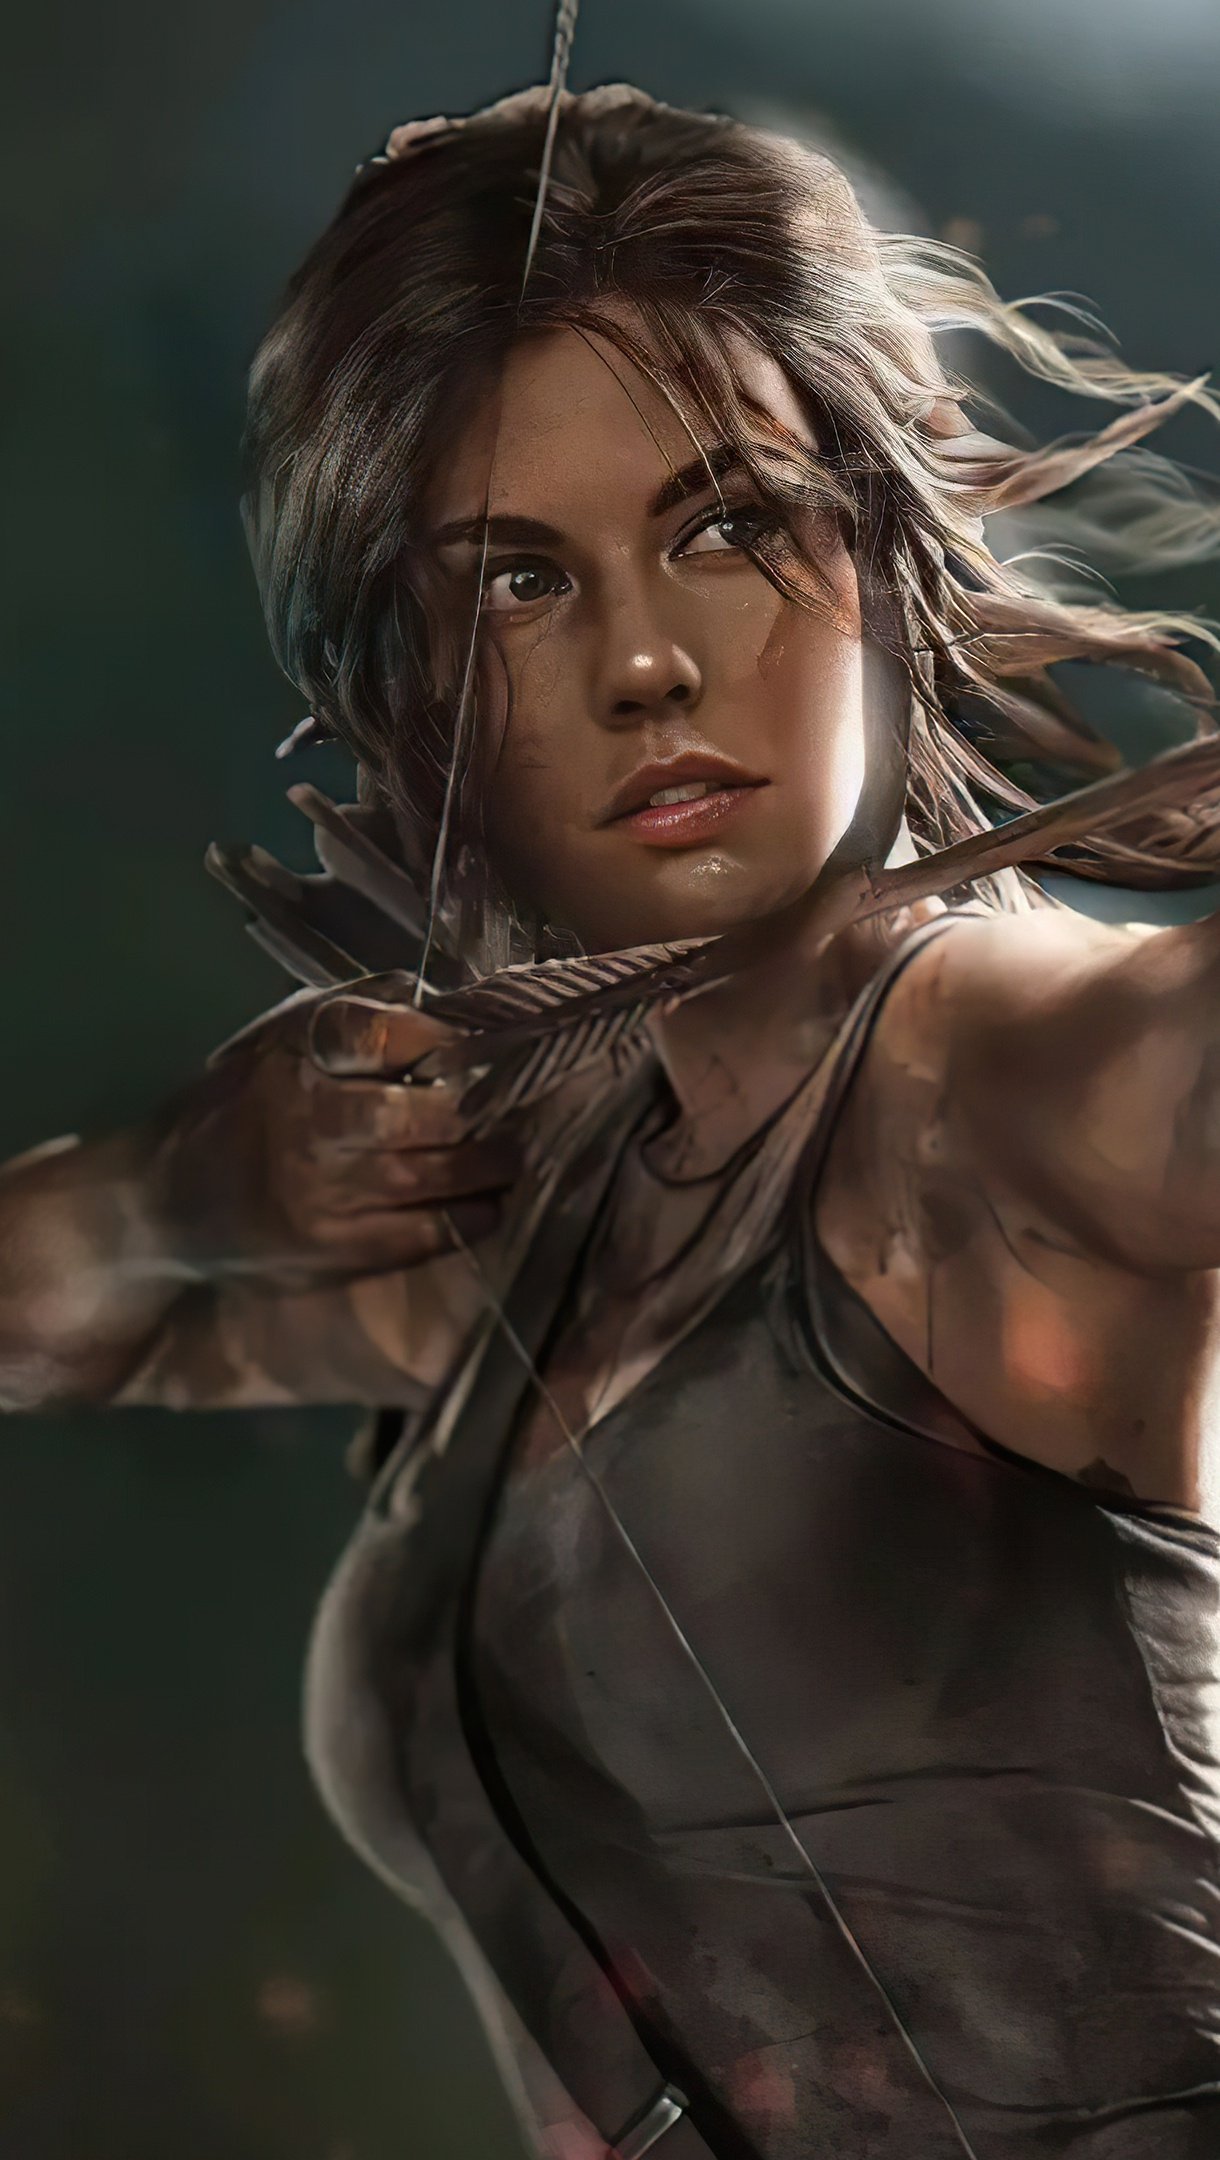 Wallpaper Lauren Cohan as Lara Croft The Tomb Raider Vertical